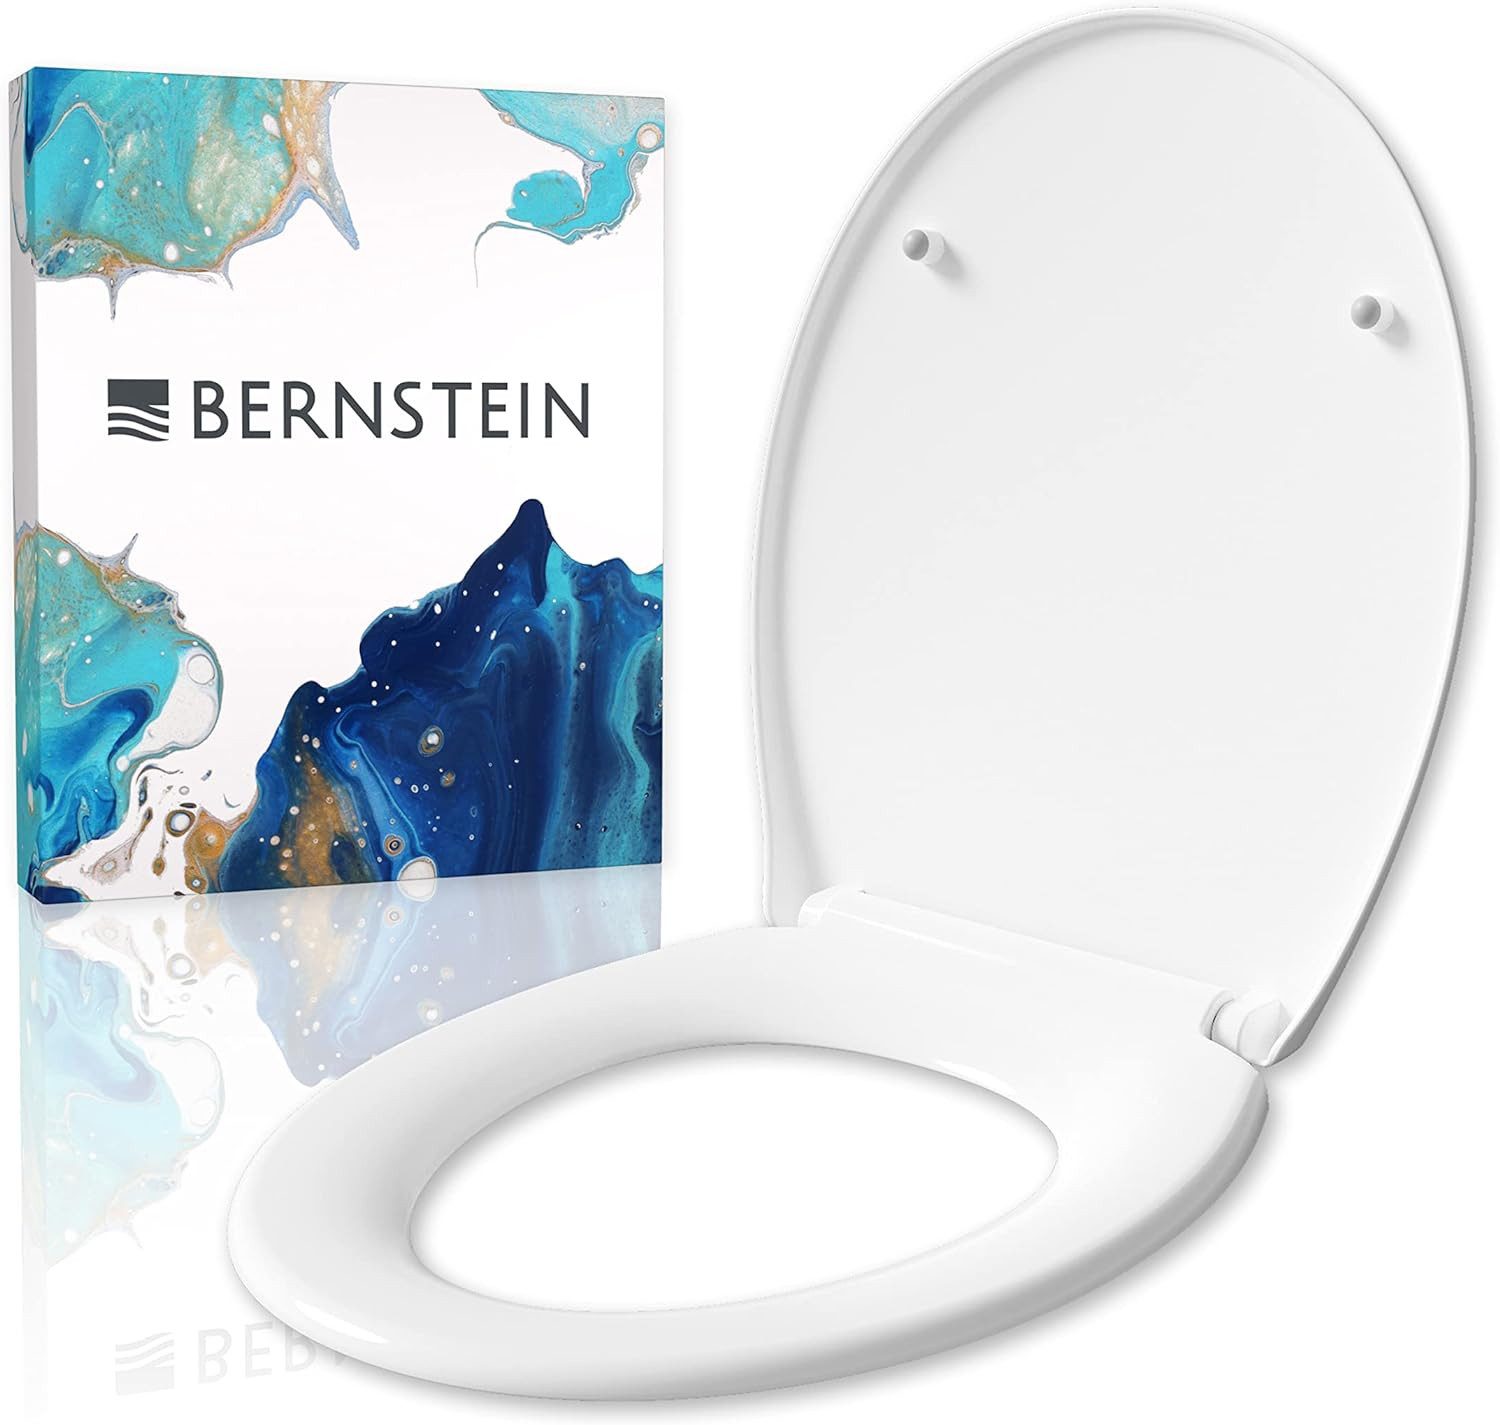 Bernstein WC-Sitz U2004 (Komplett-Set, inkl. Befestigungsmaterial), weiß / Oval / Absenkautomatik / aus Duroplast / abnehmbar